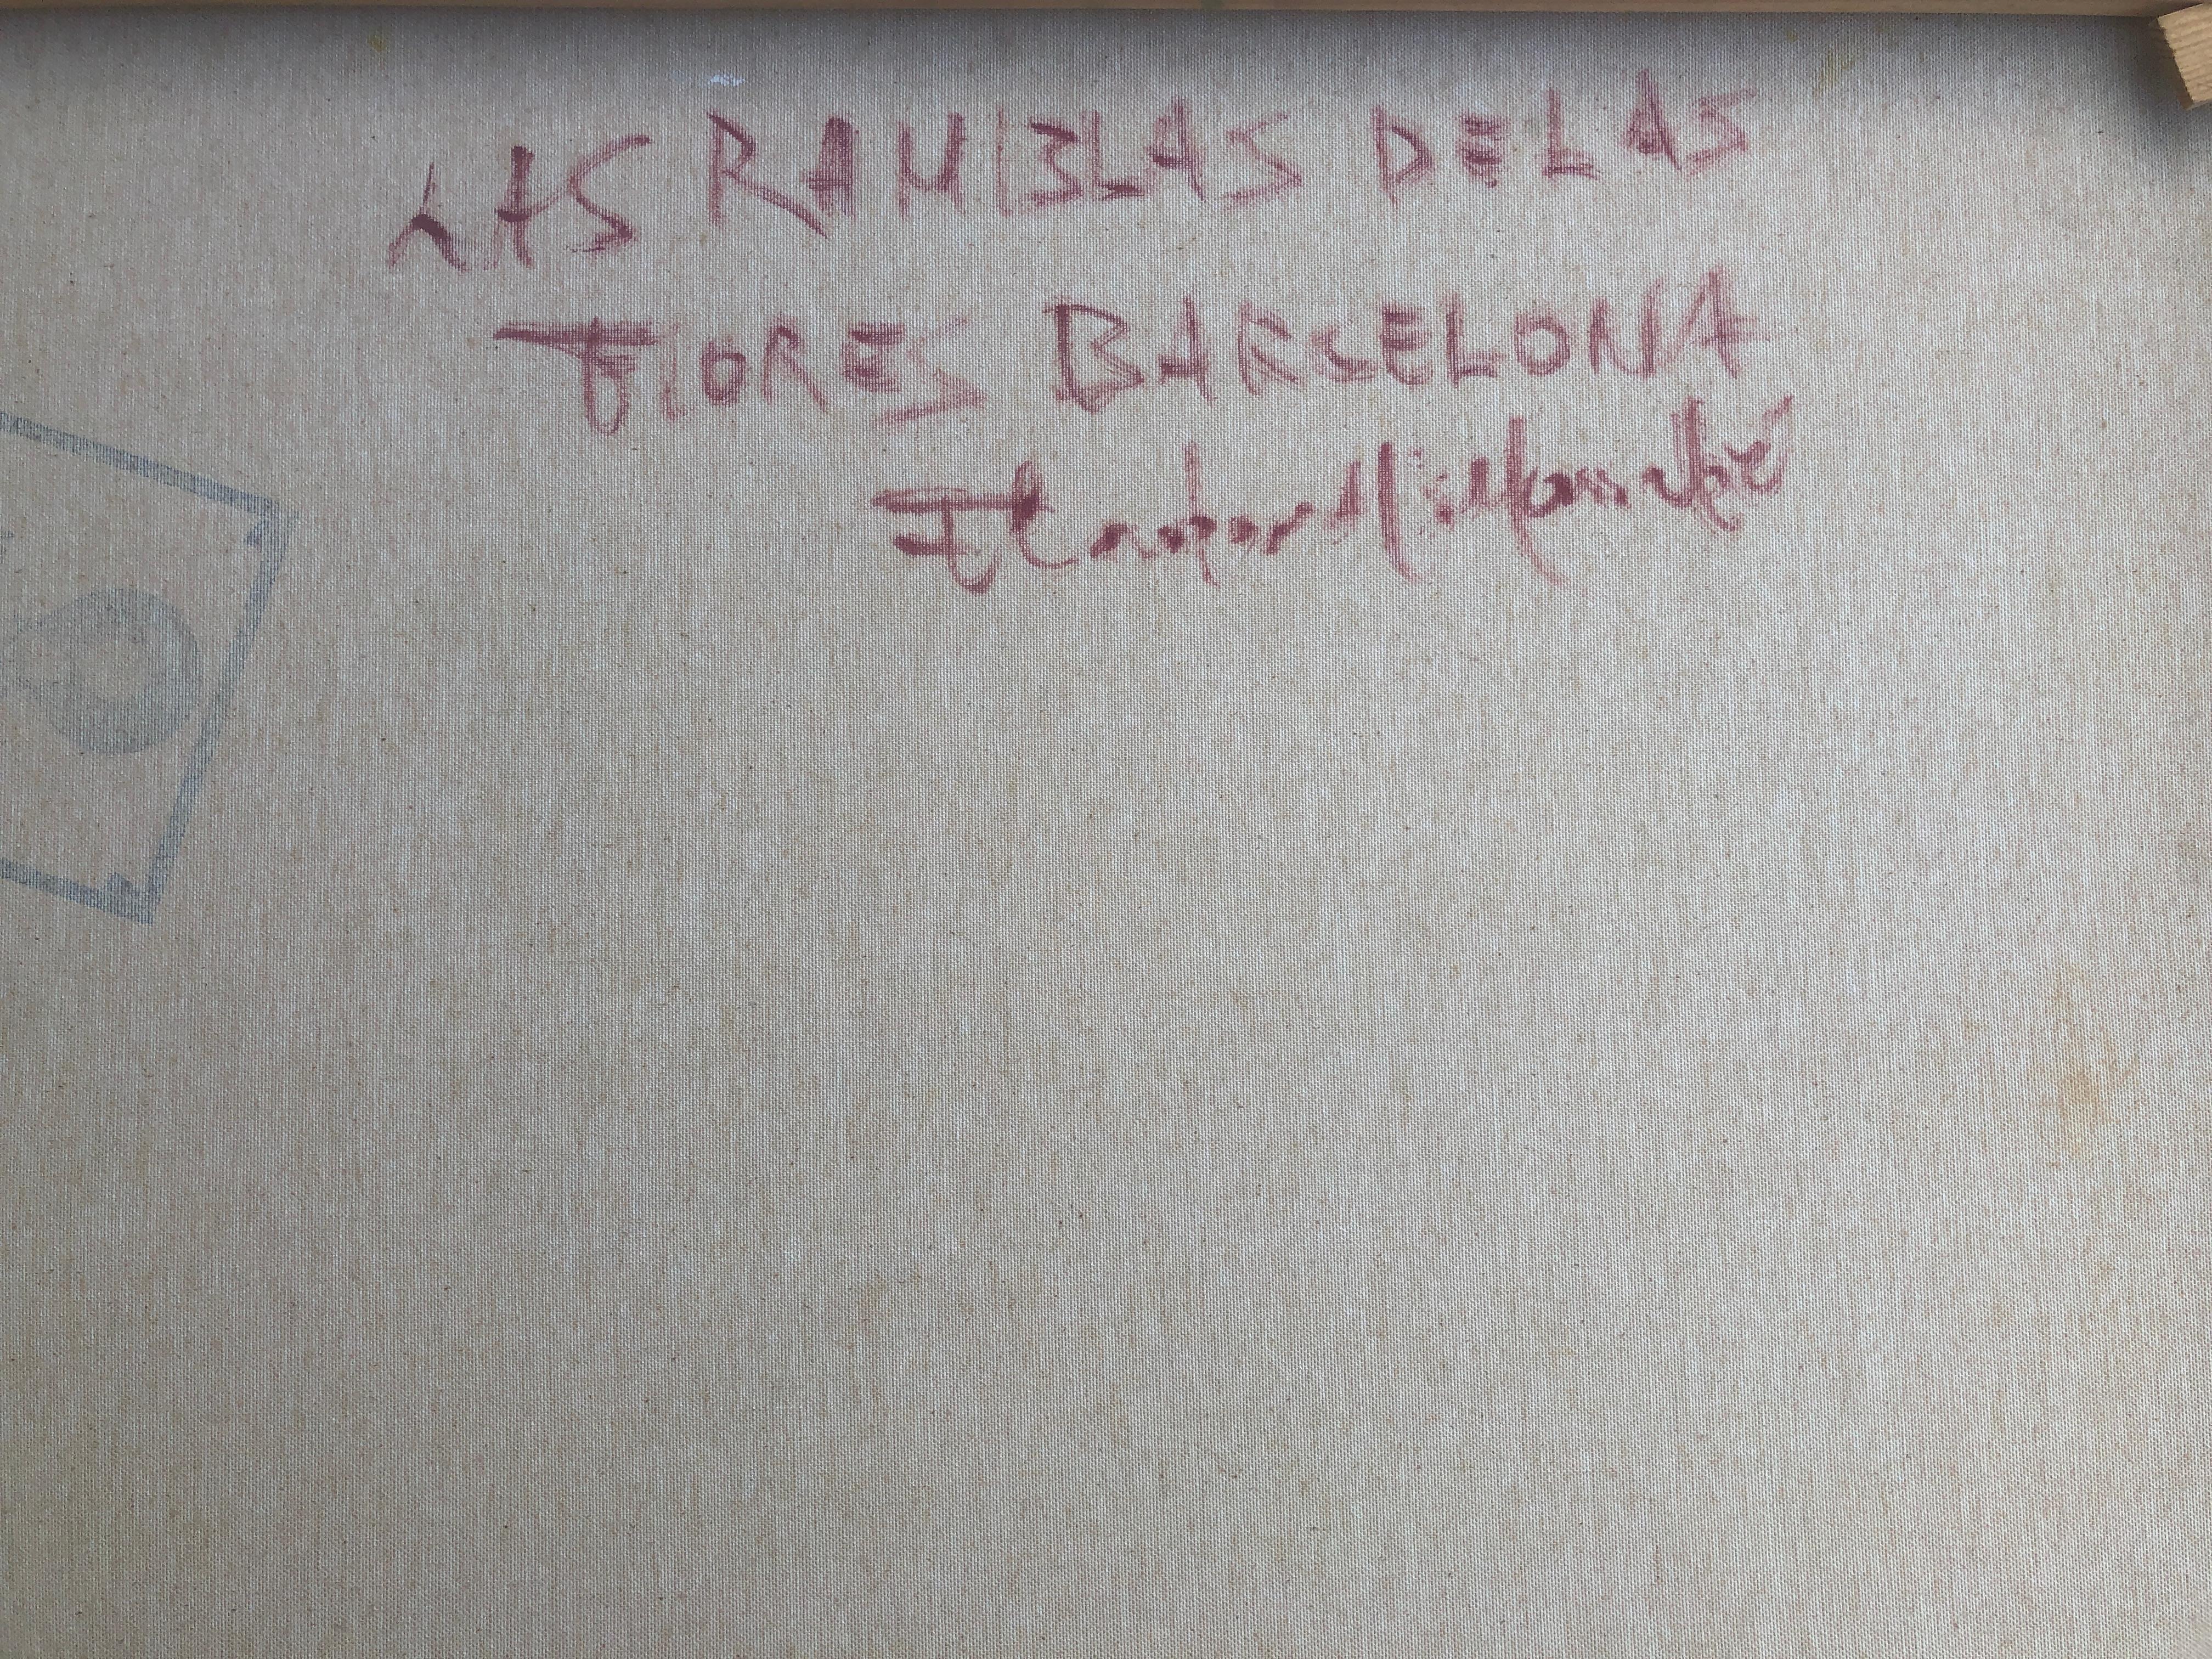 Francisco Carbonell Massabe (1928) - Rambla de las flores in Barcelona - Oil on canvas
Oil measures 60x73 cm.
Frameless.